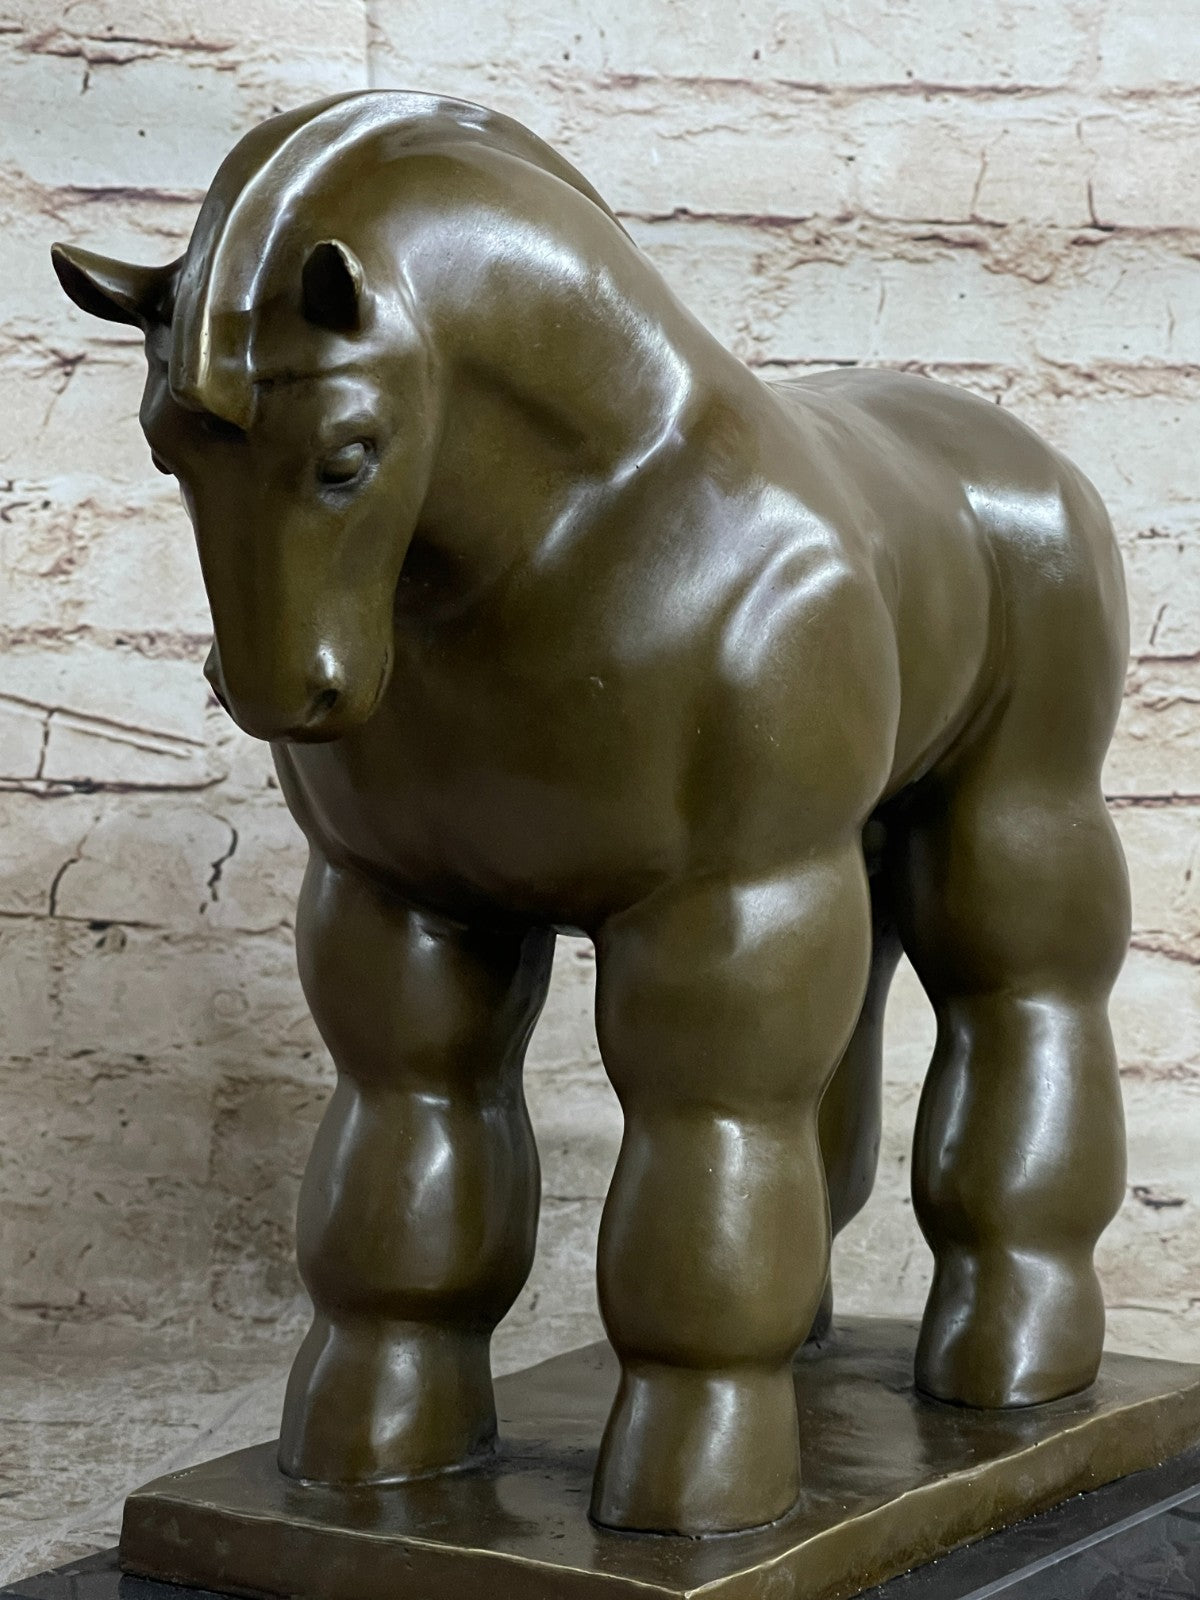 F. BOTERO "Trojan Horse" ART BRONZE SCULPTURE, SIGNED, SEALED FIGURINE FIGURE